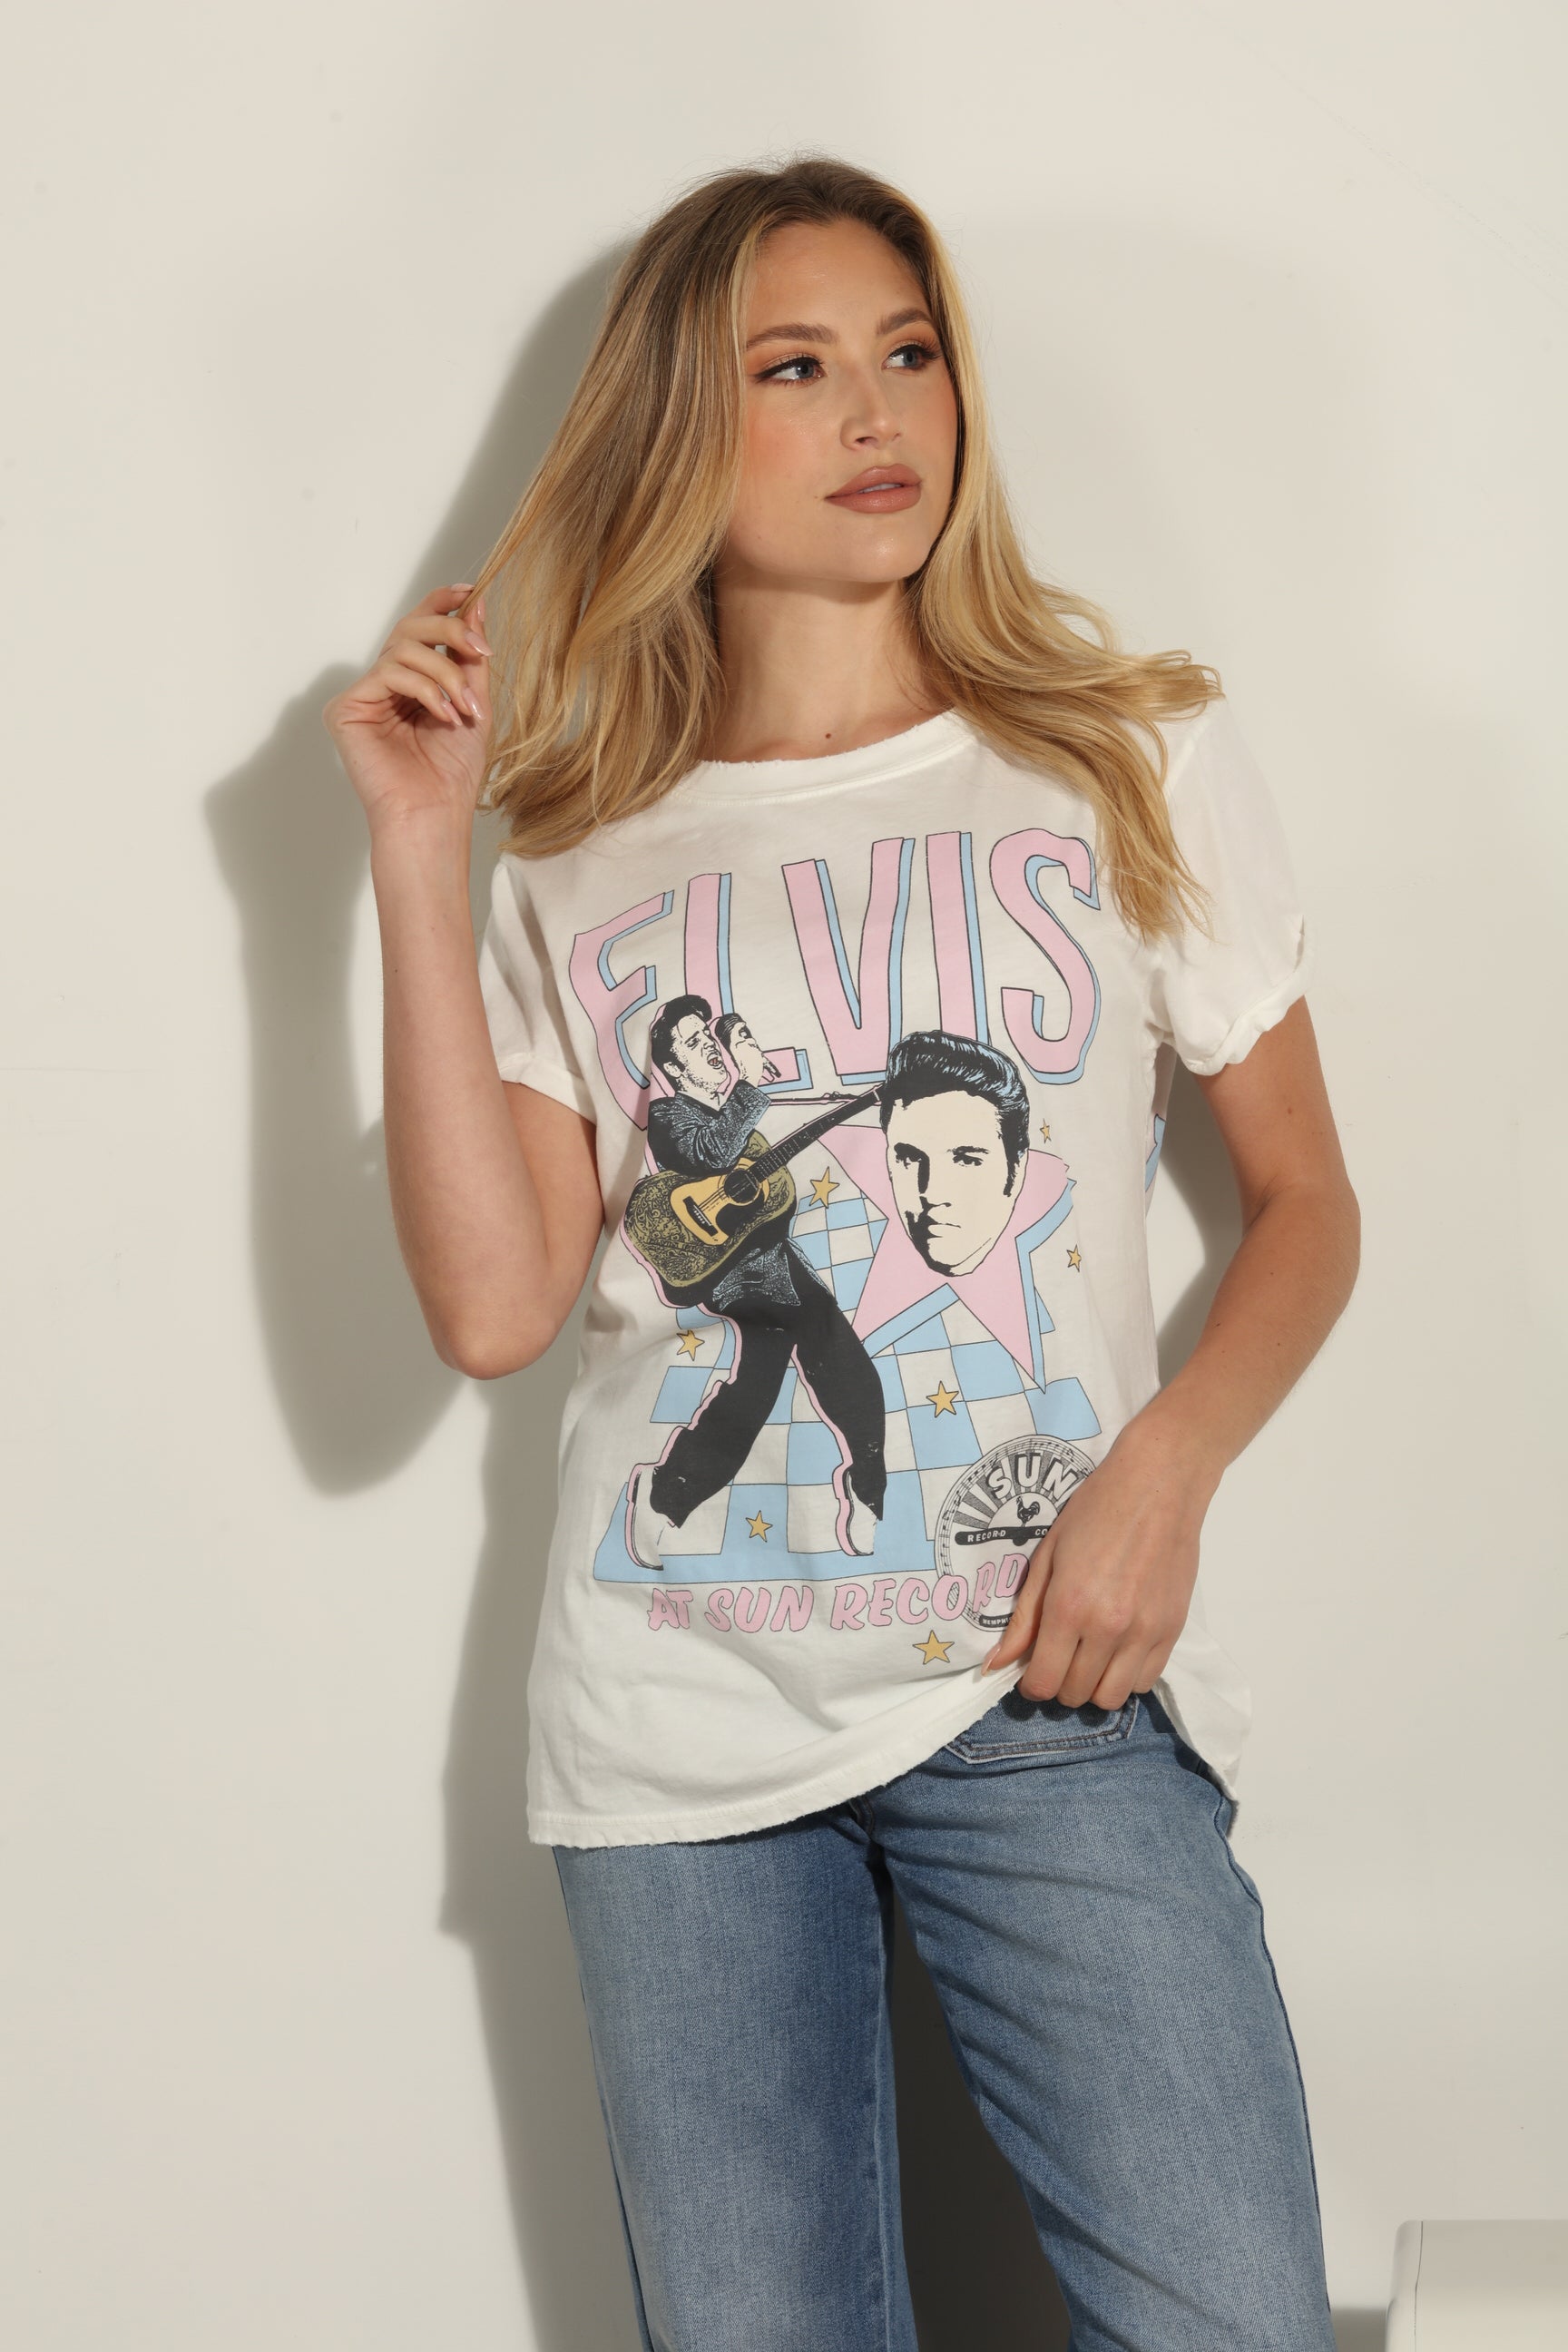 Elvis Presley X Sun Records Tee